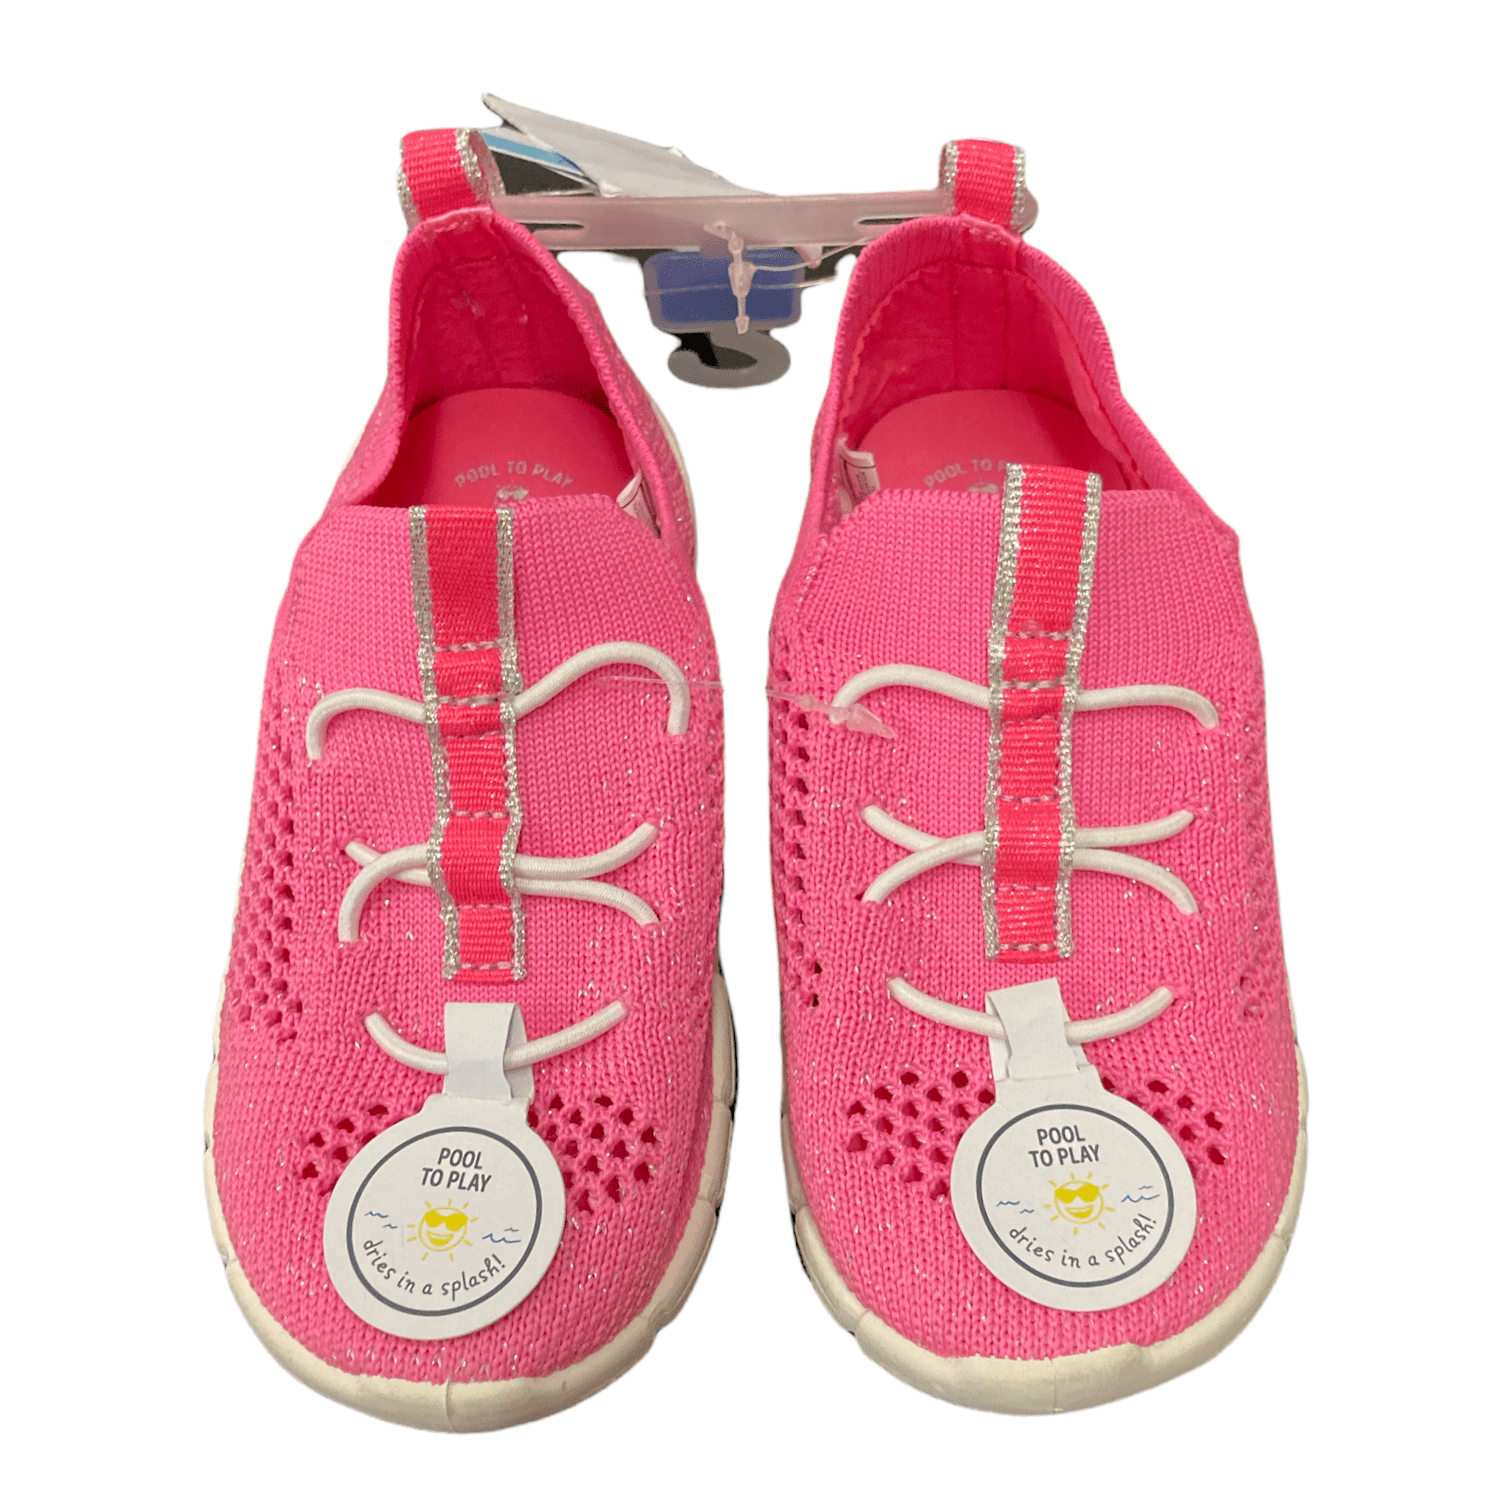 Oshkosh B'gosh Tahoe Pool to Play Shoes Toddler Girls Assorted Sizes Pink 